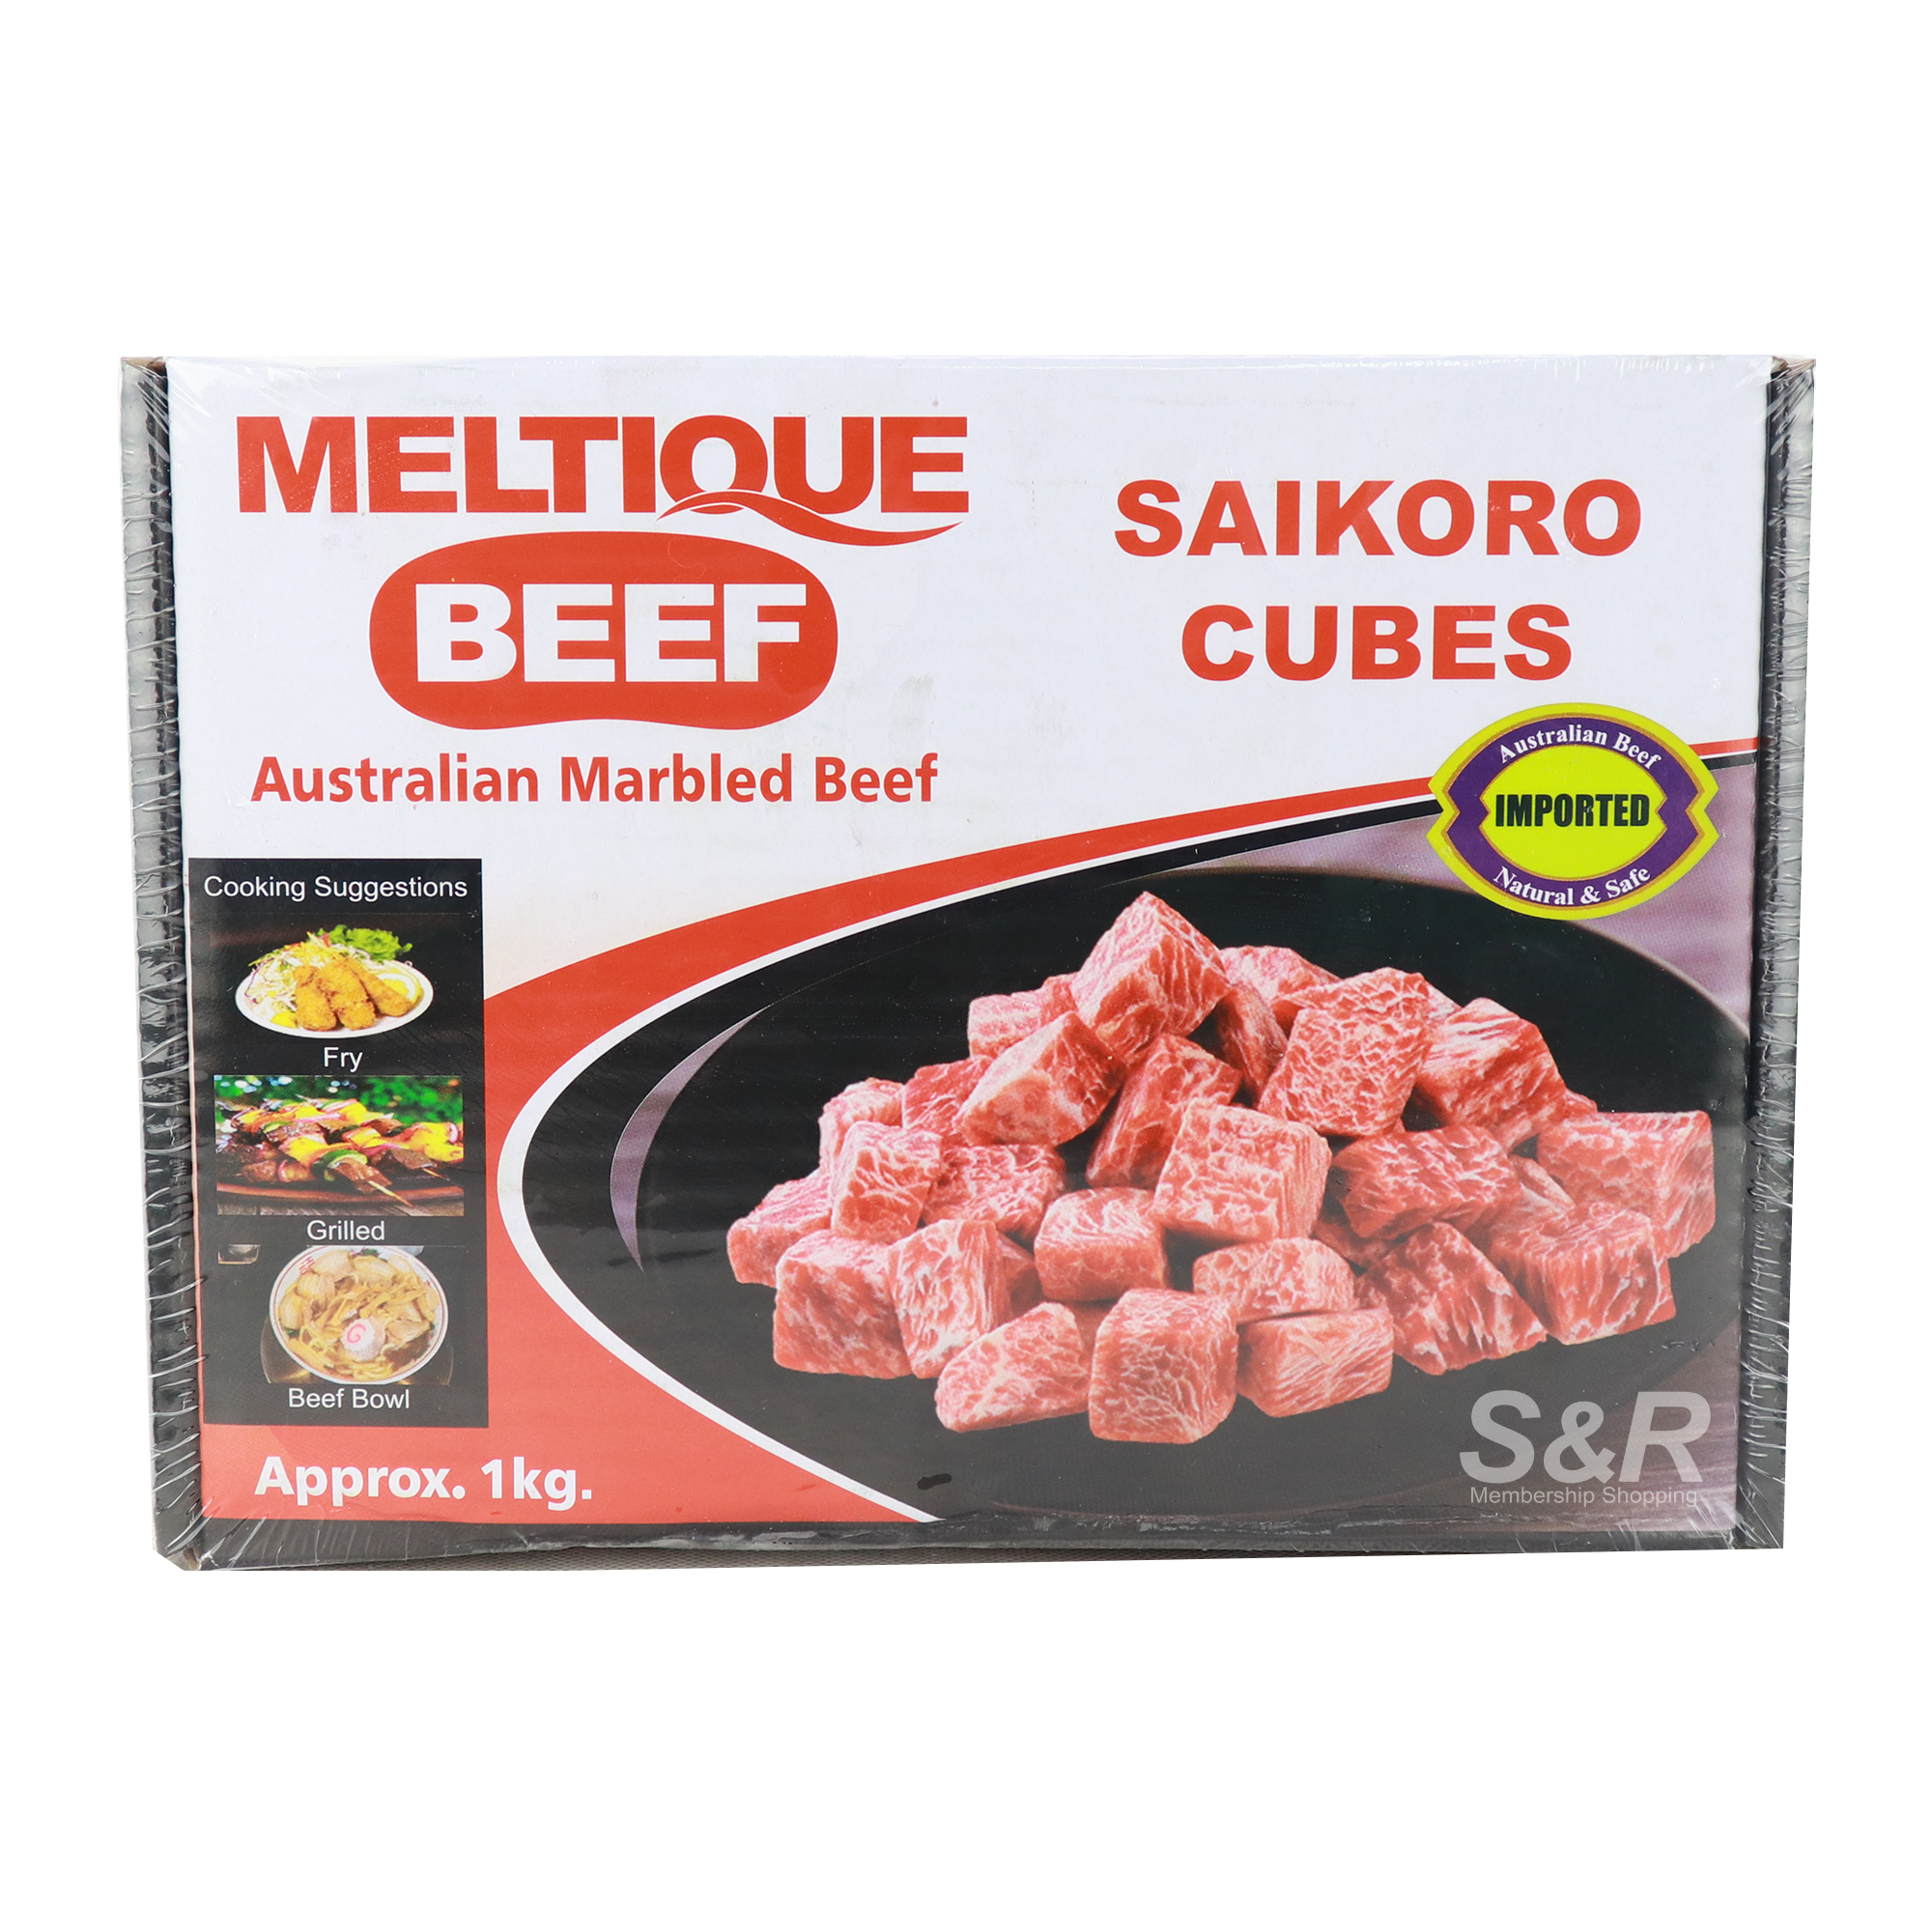 Meltique Beef Australian Marbled Beef Saikoro Cubes 1kg